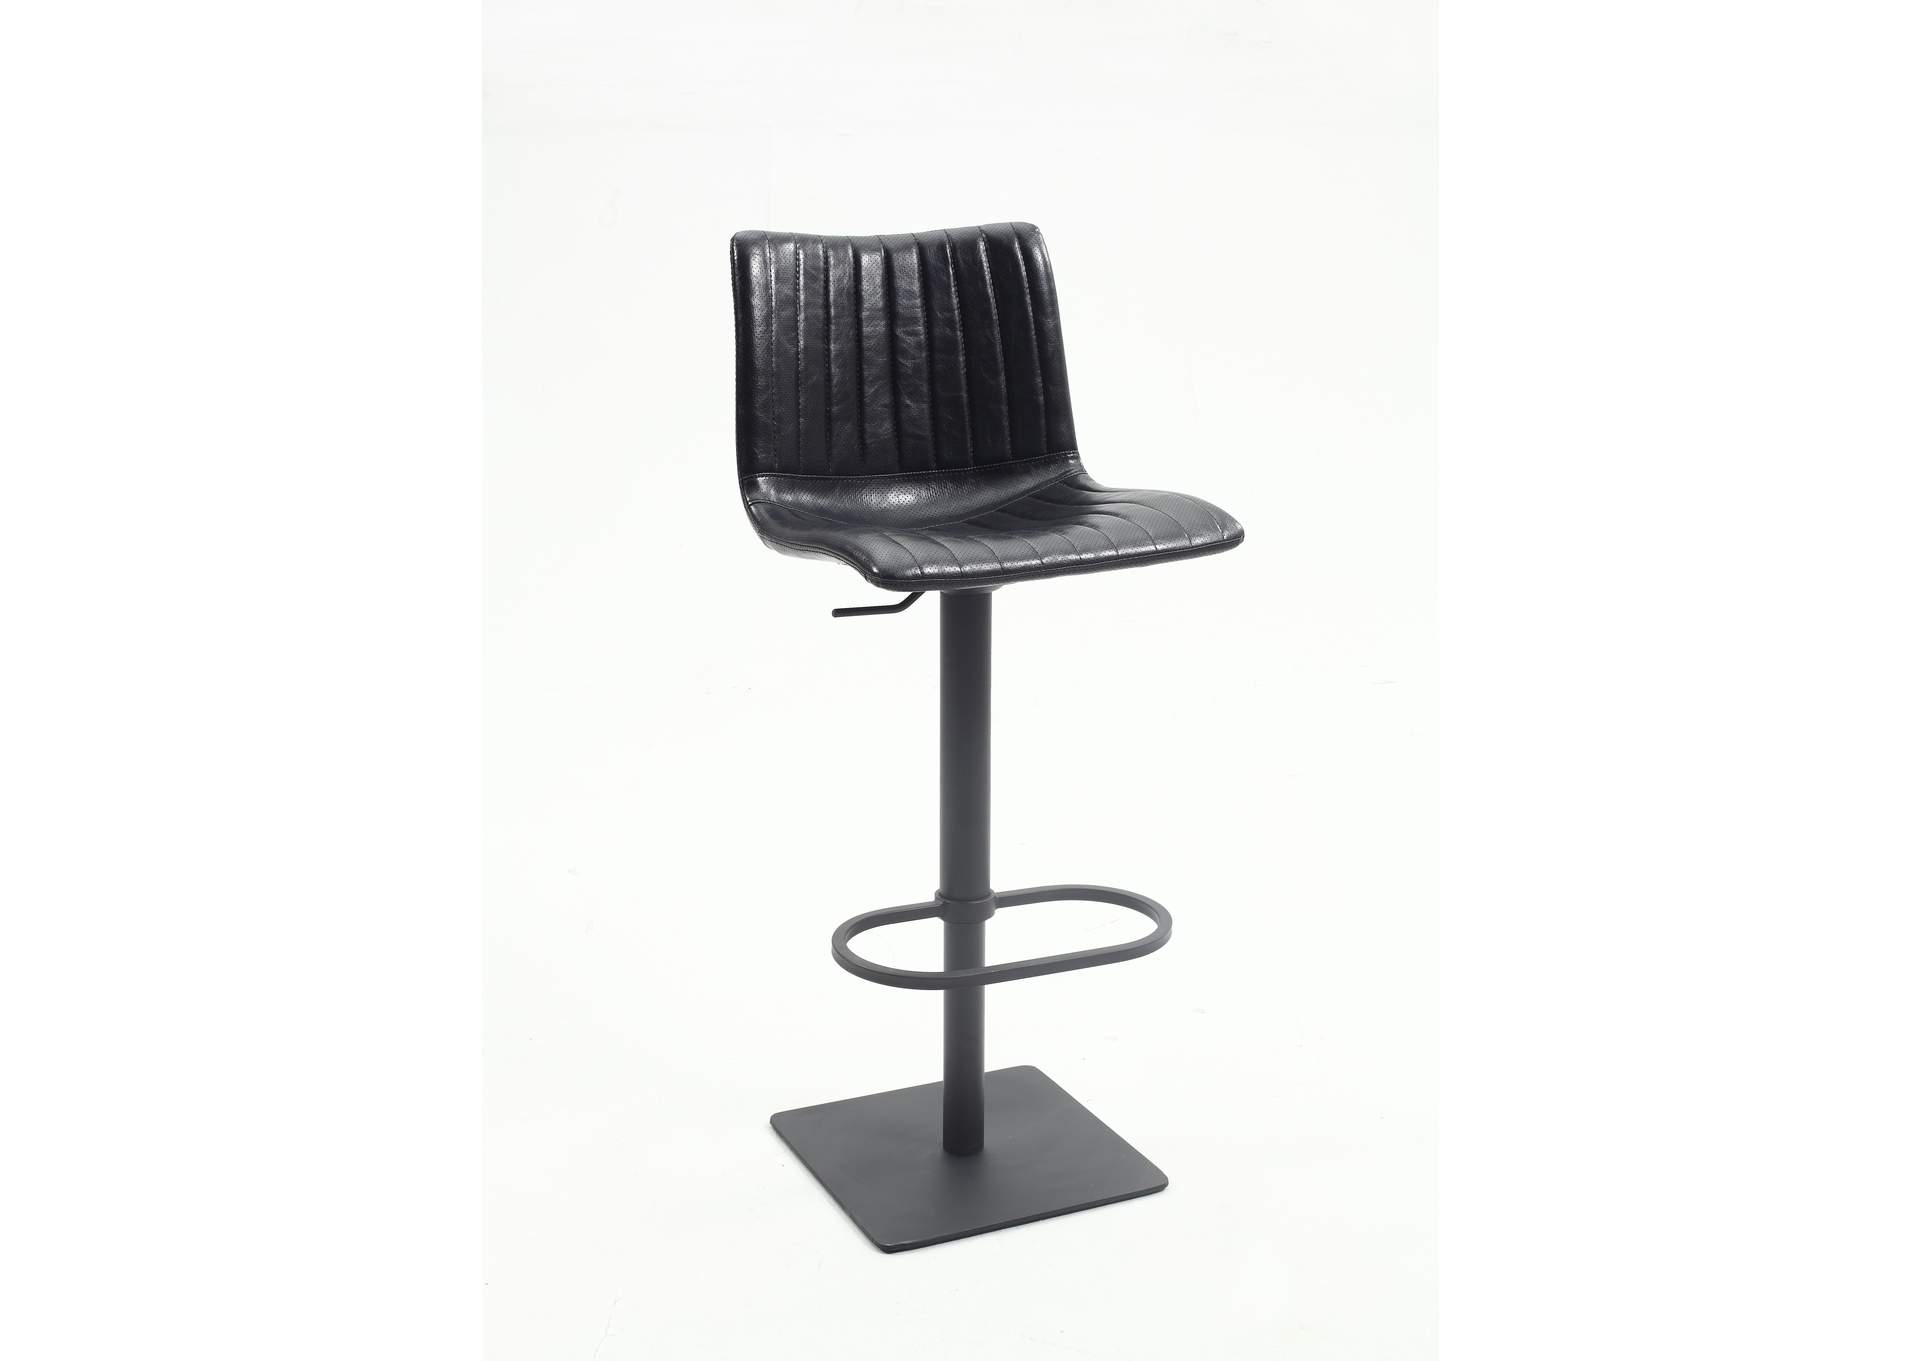 Black Vintage-Style Pneumatic-Adjustable Stool,Chintaly Imports